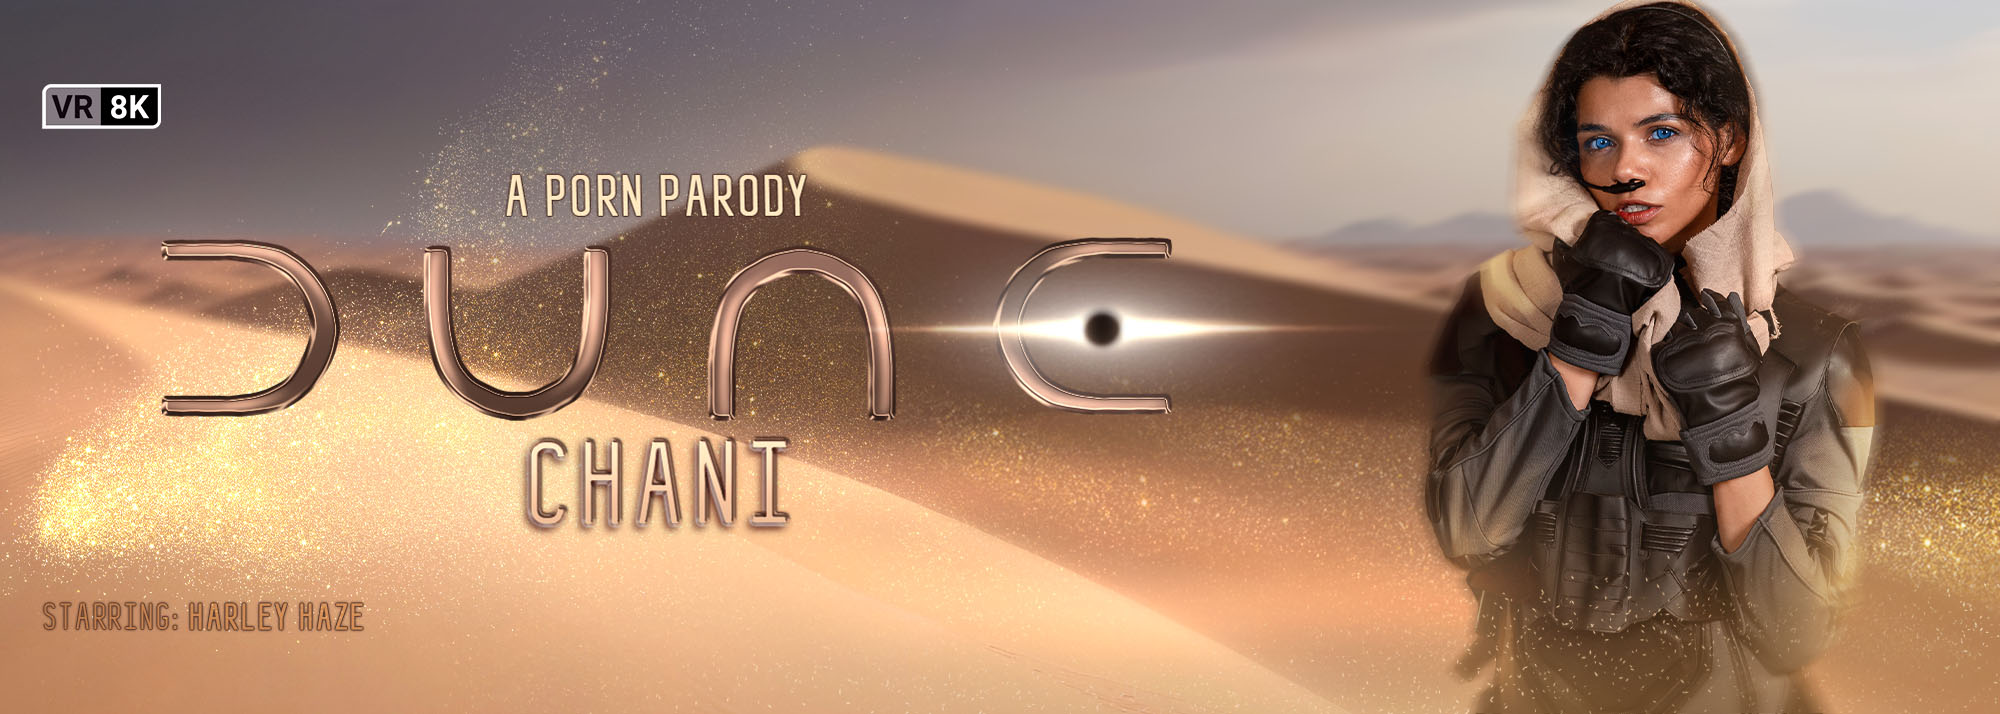 Dune: Chani (A Porn Parody) Slideshow